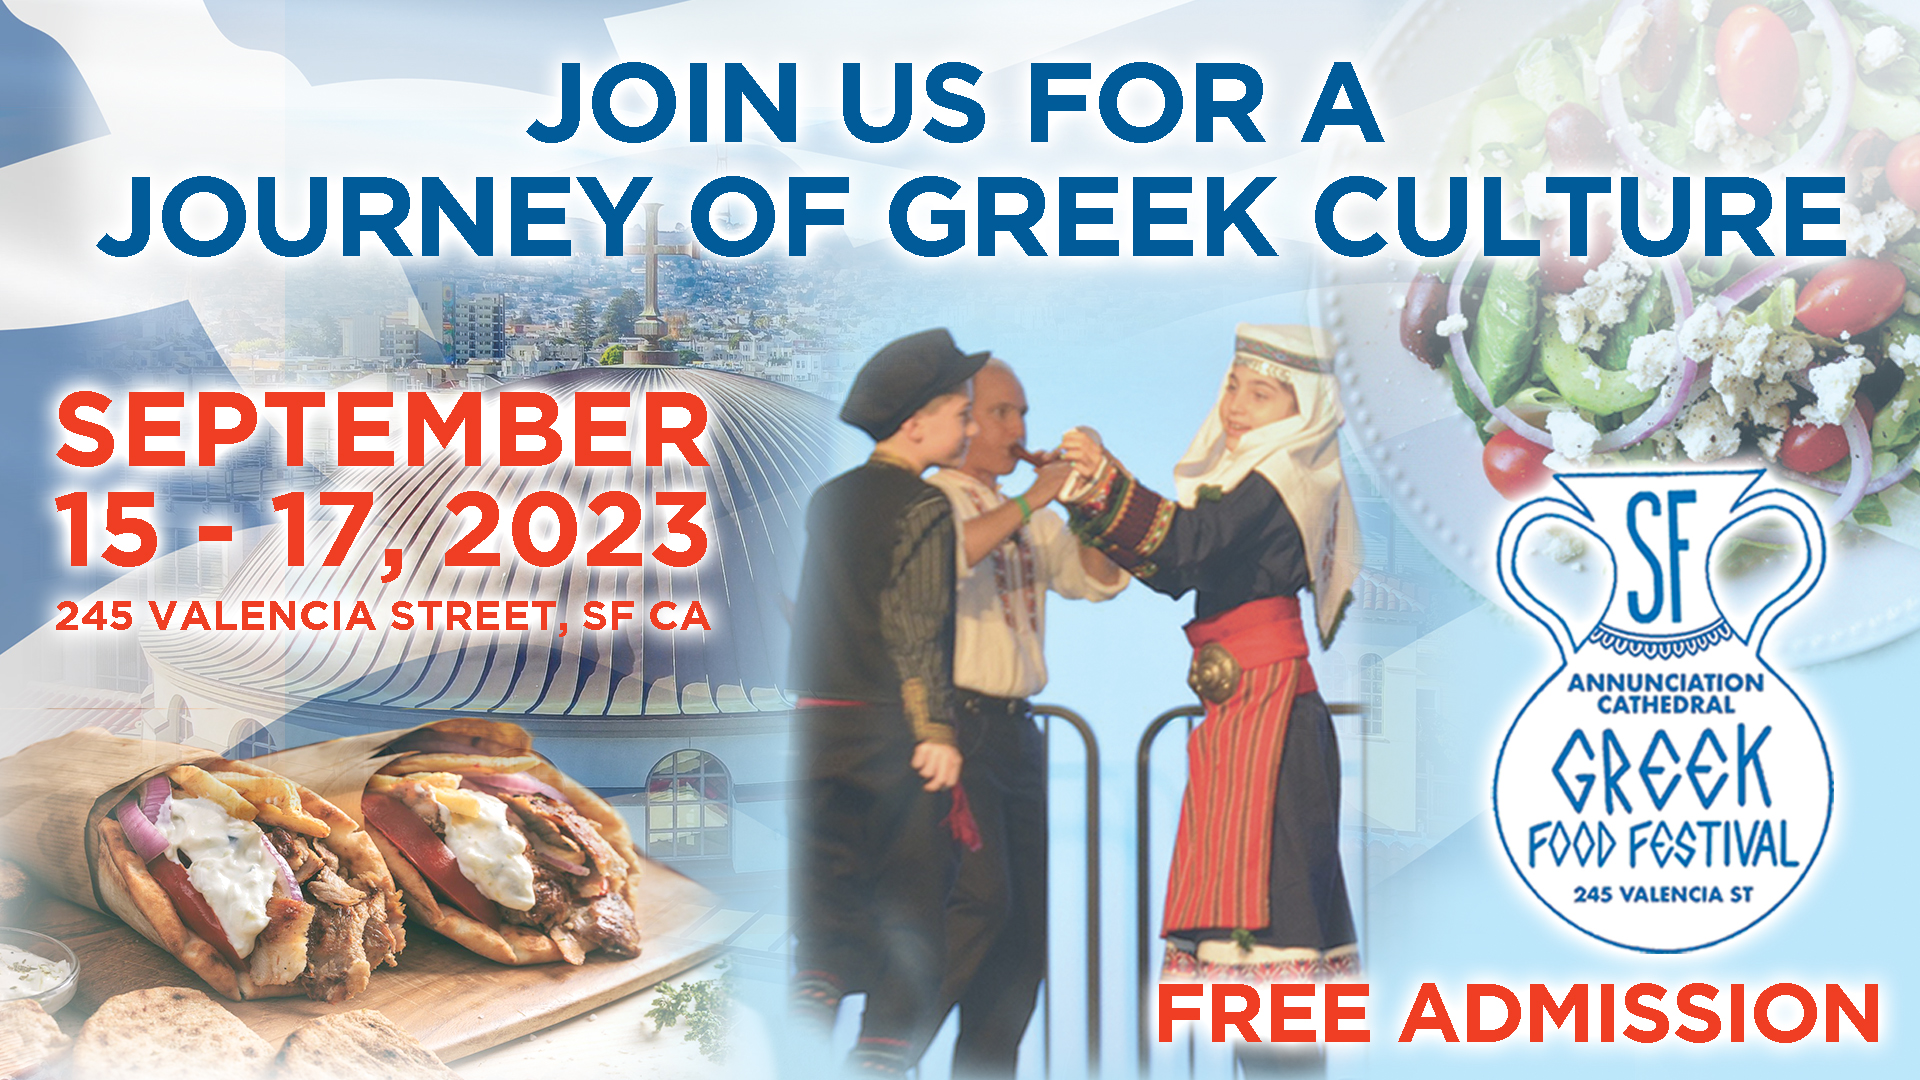 Our Annual Greek Food Festival